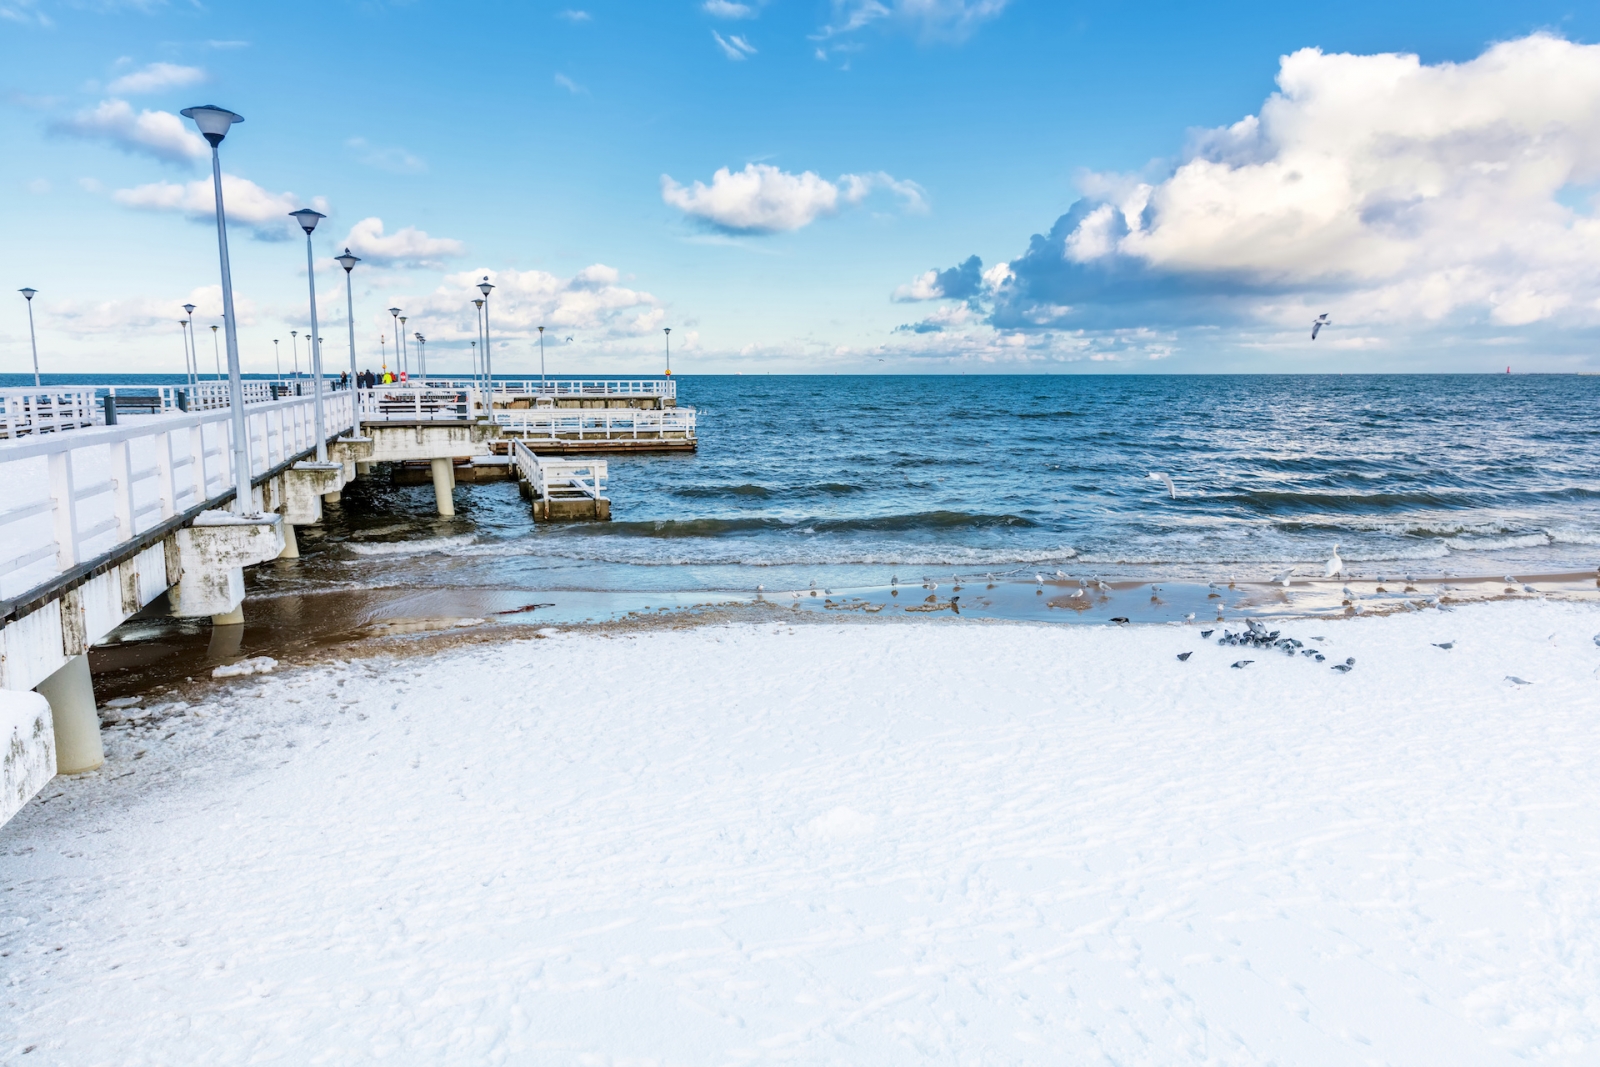 Paisaje invernal del mar Báltico.  Muelle en Gdansk Brzezno, Polonia